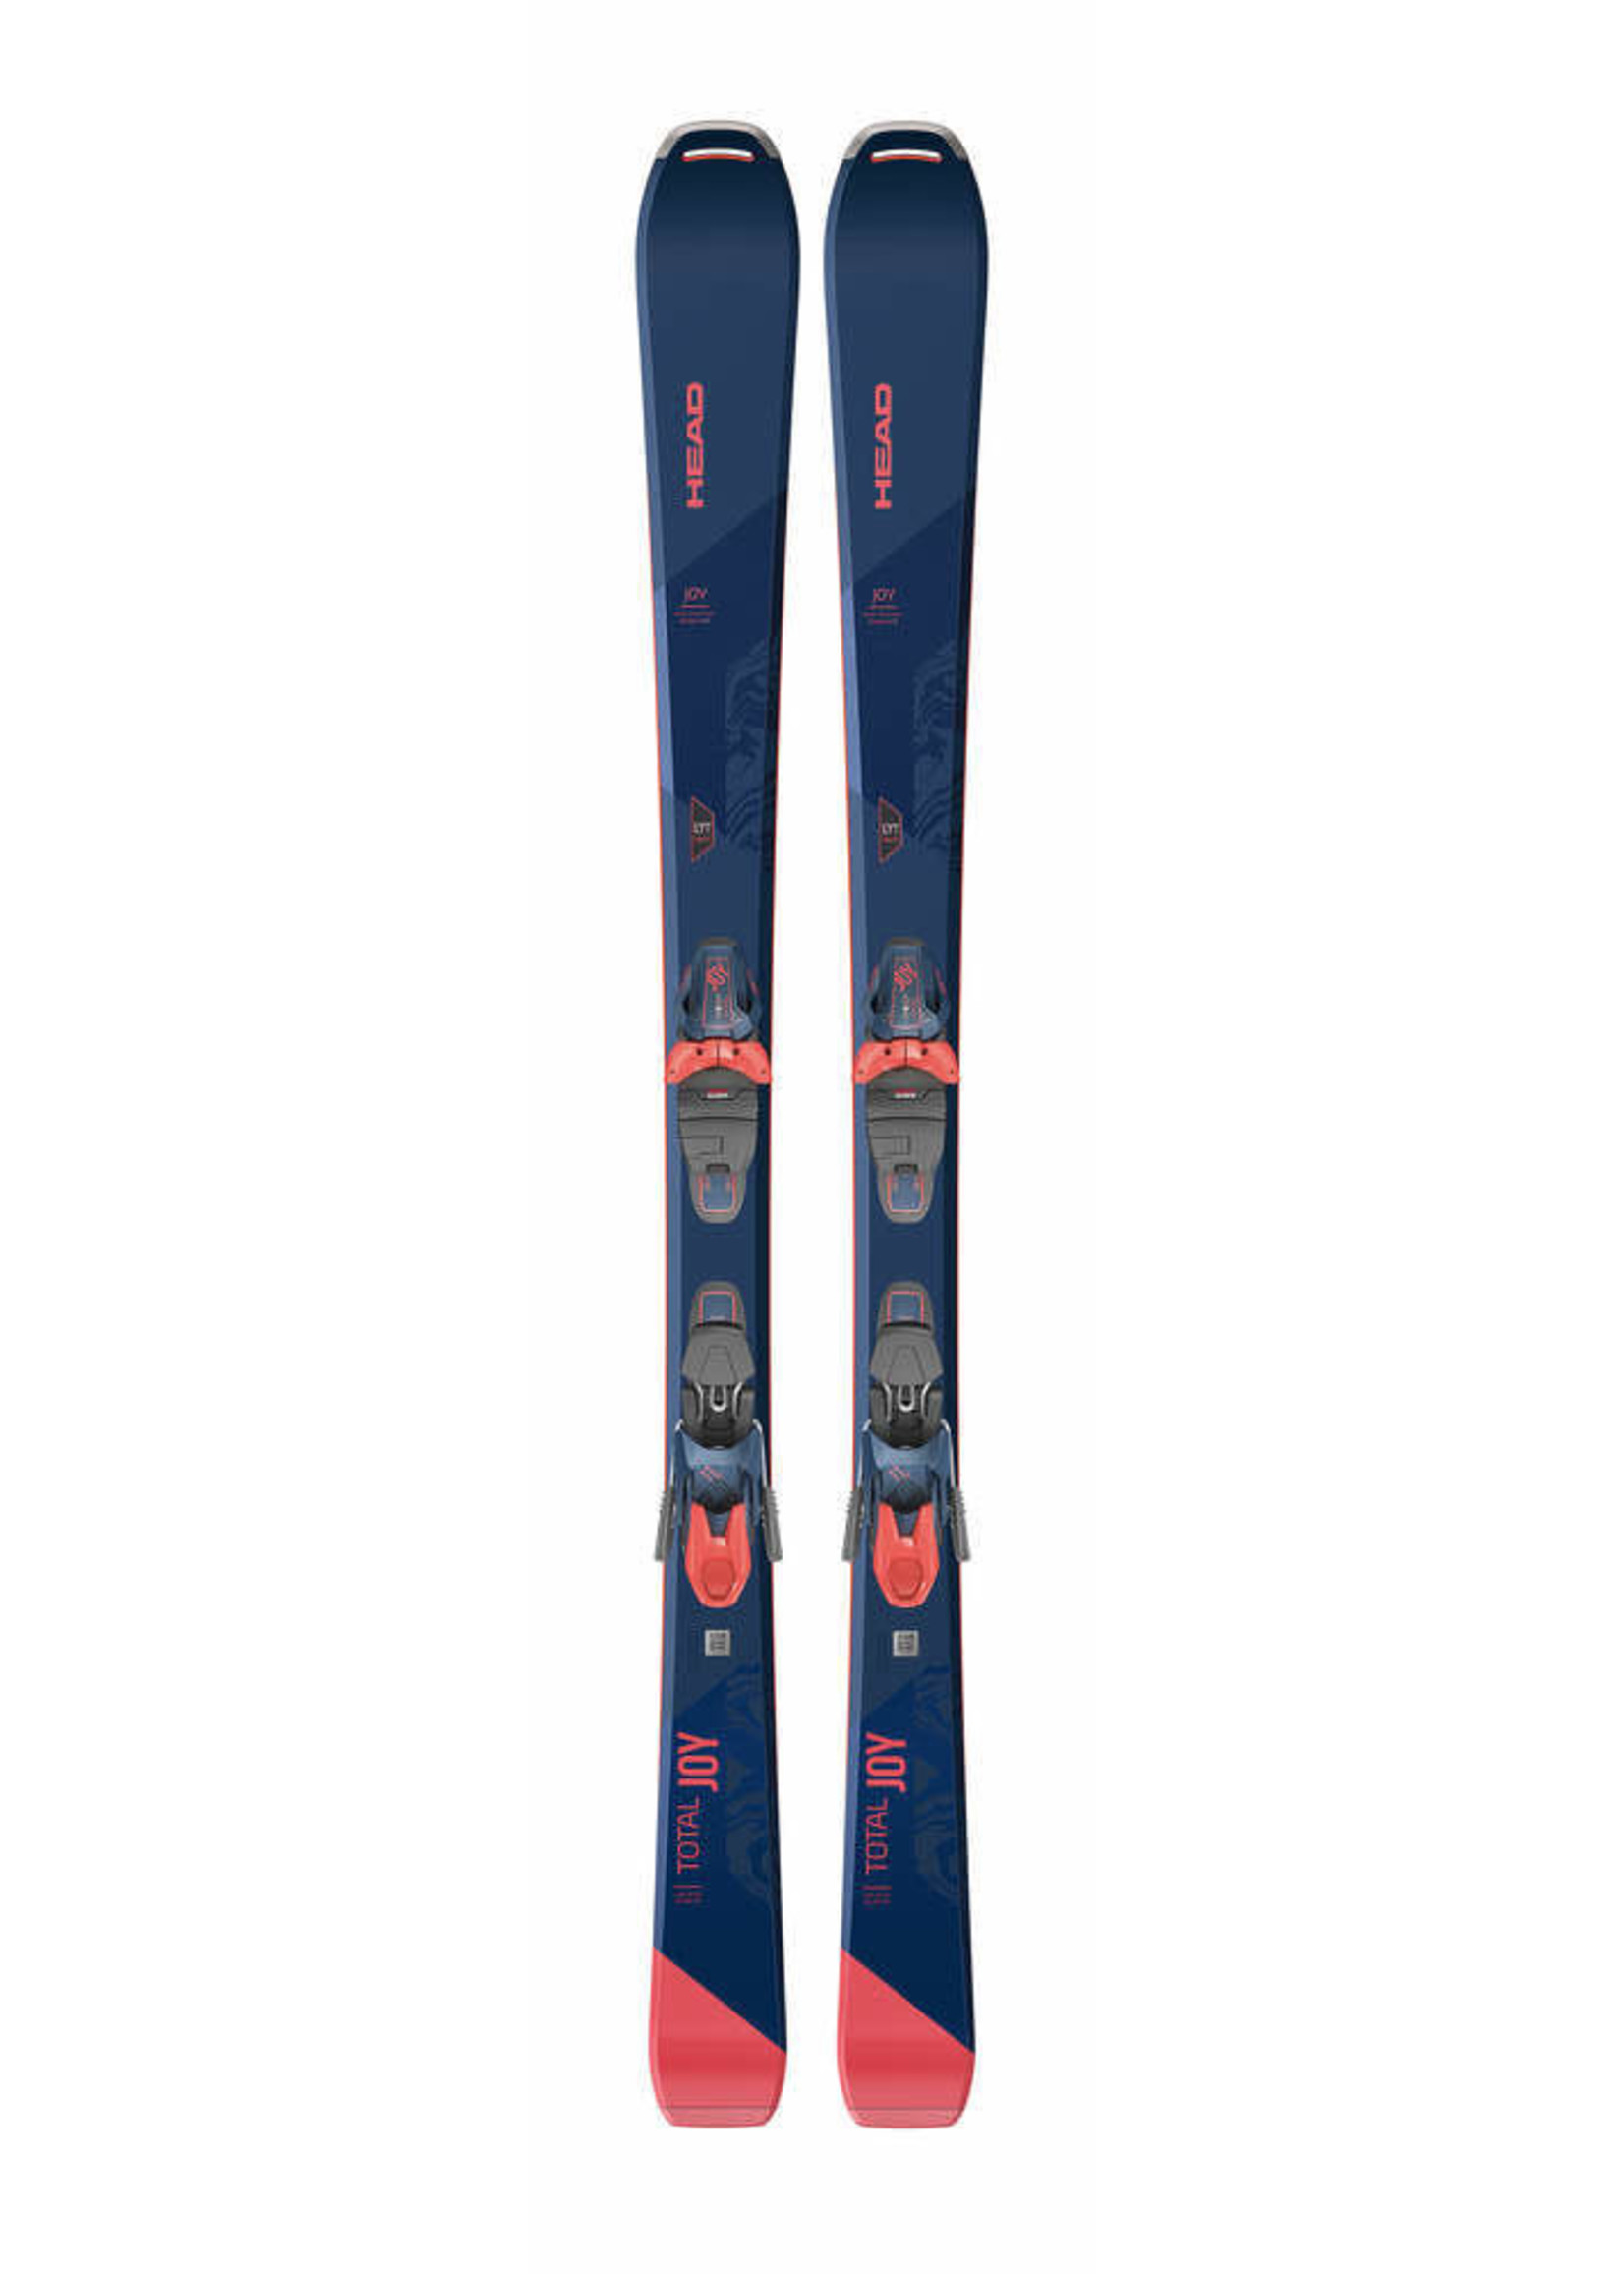 Head Alpine Ski + Binding Joy Total Pro SLR